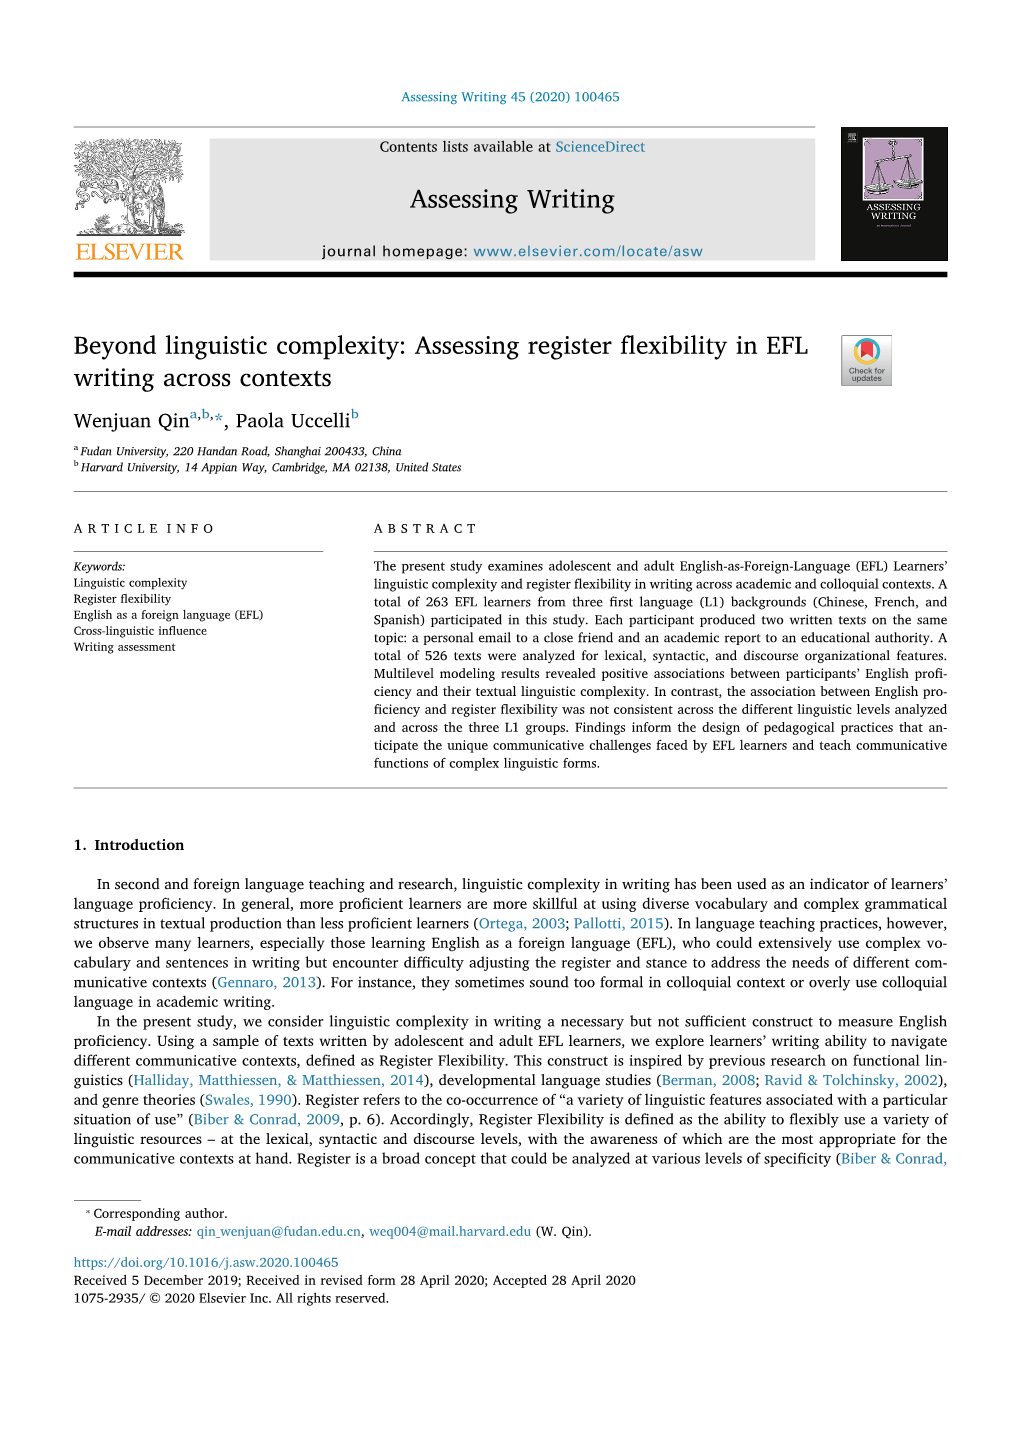 Assessing Register Flexibility in EFL Writing Across Contexts